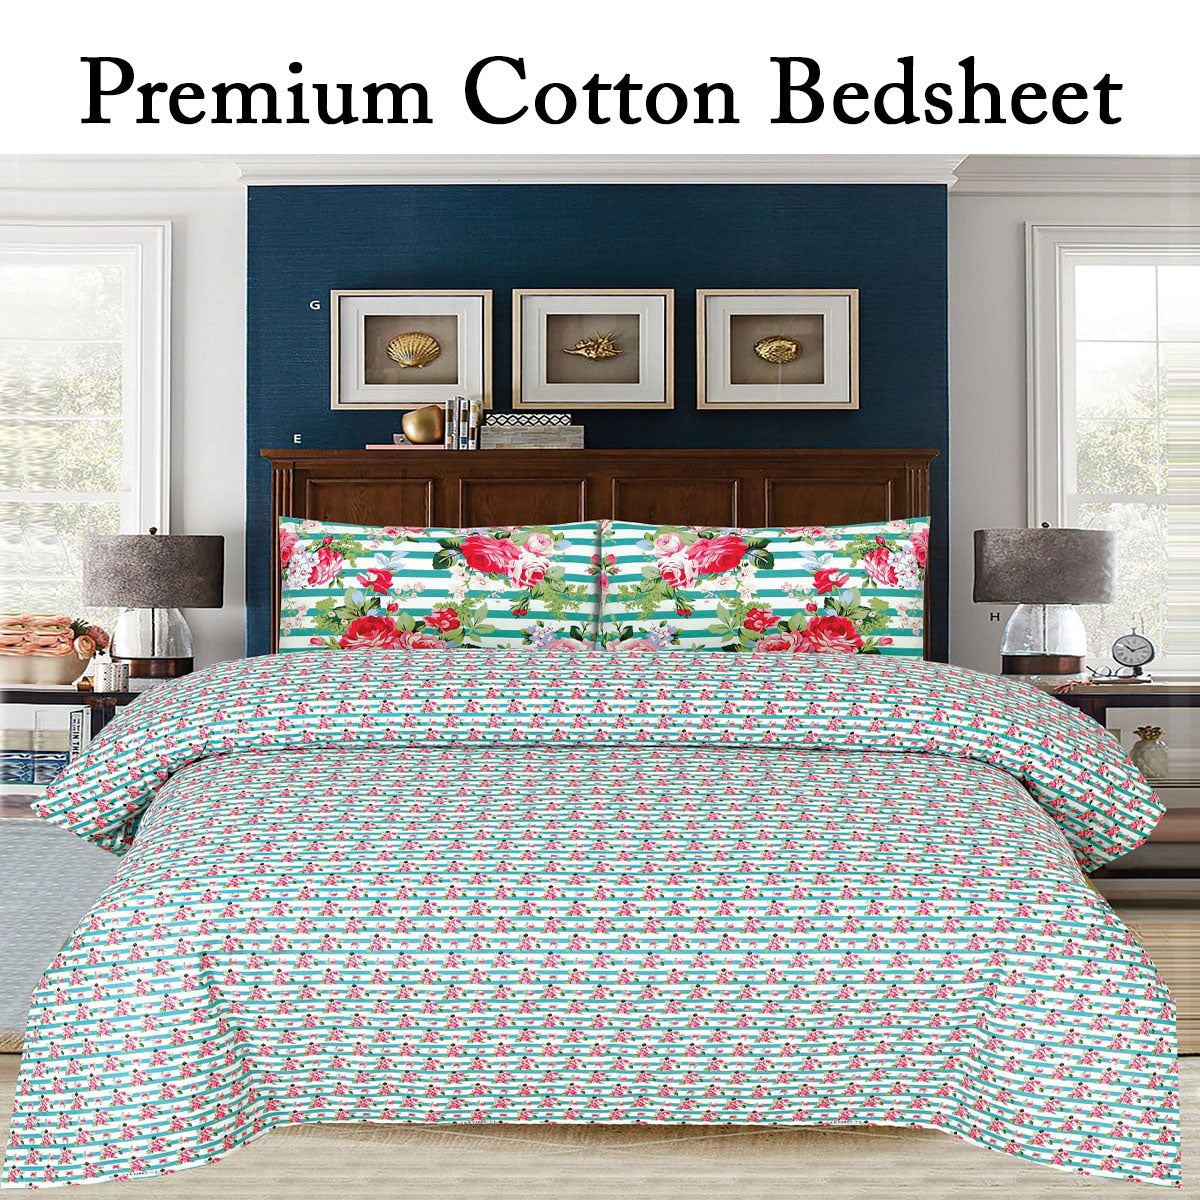 PREMIUM COTTON BED SHEET